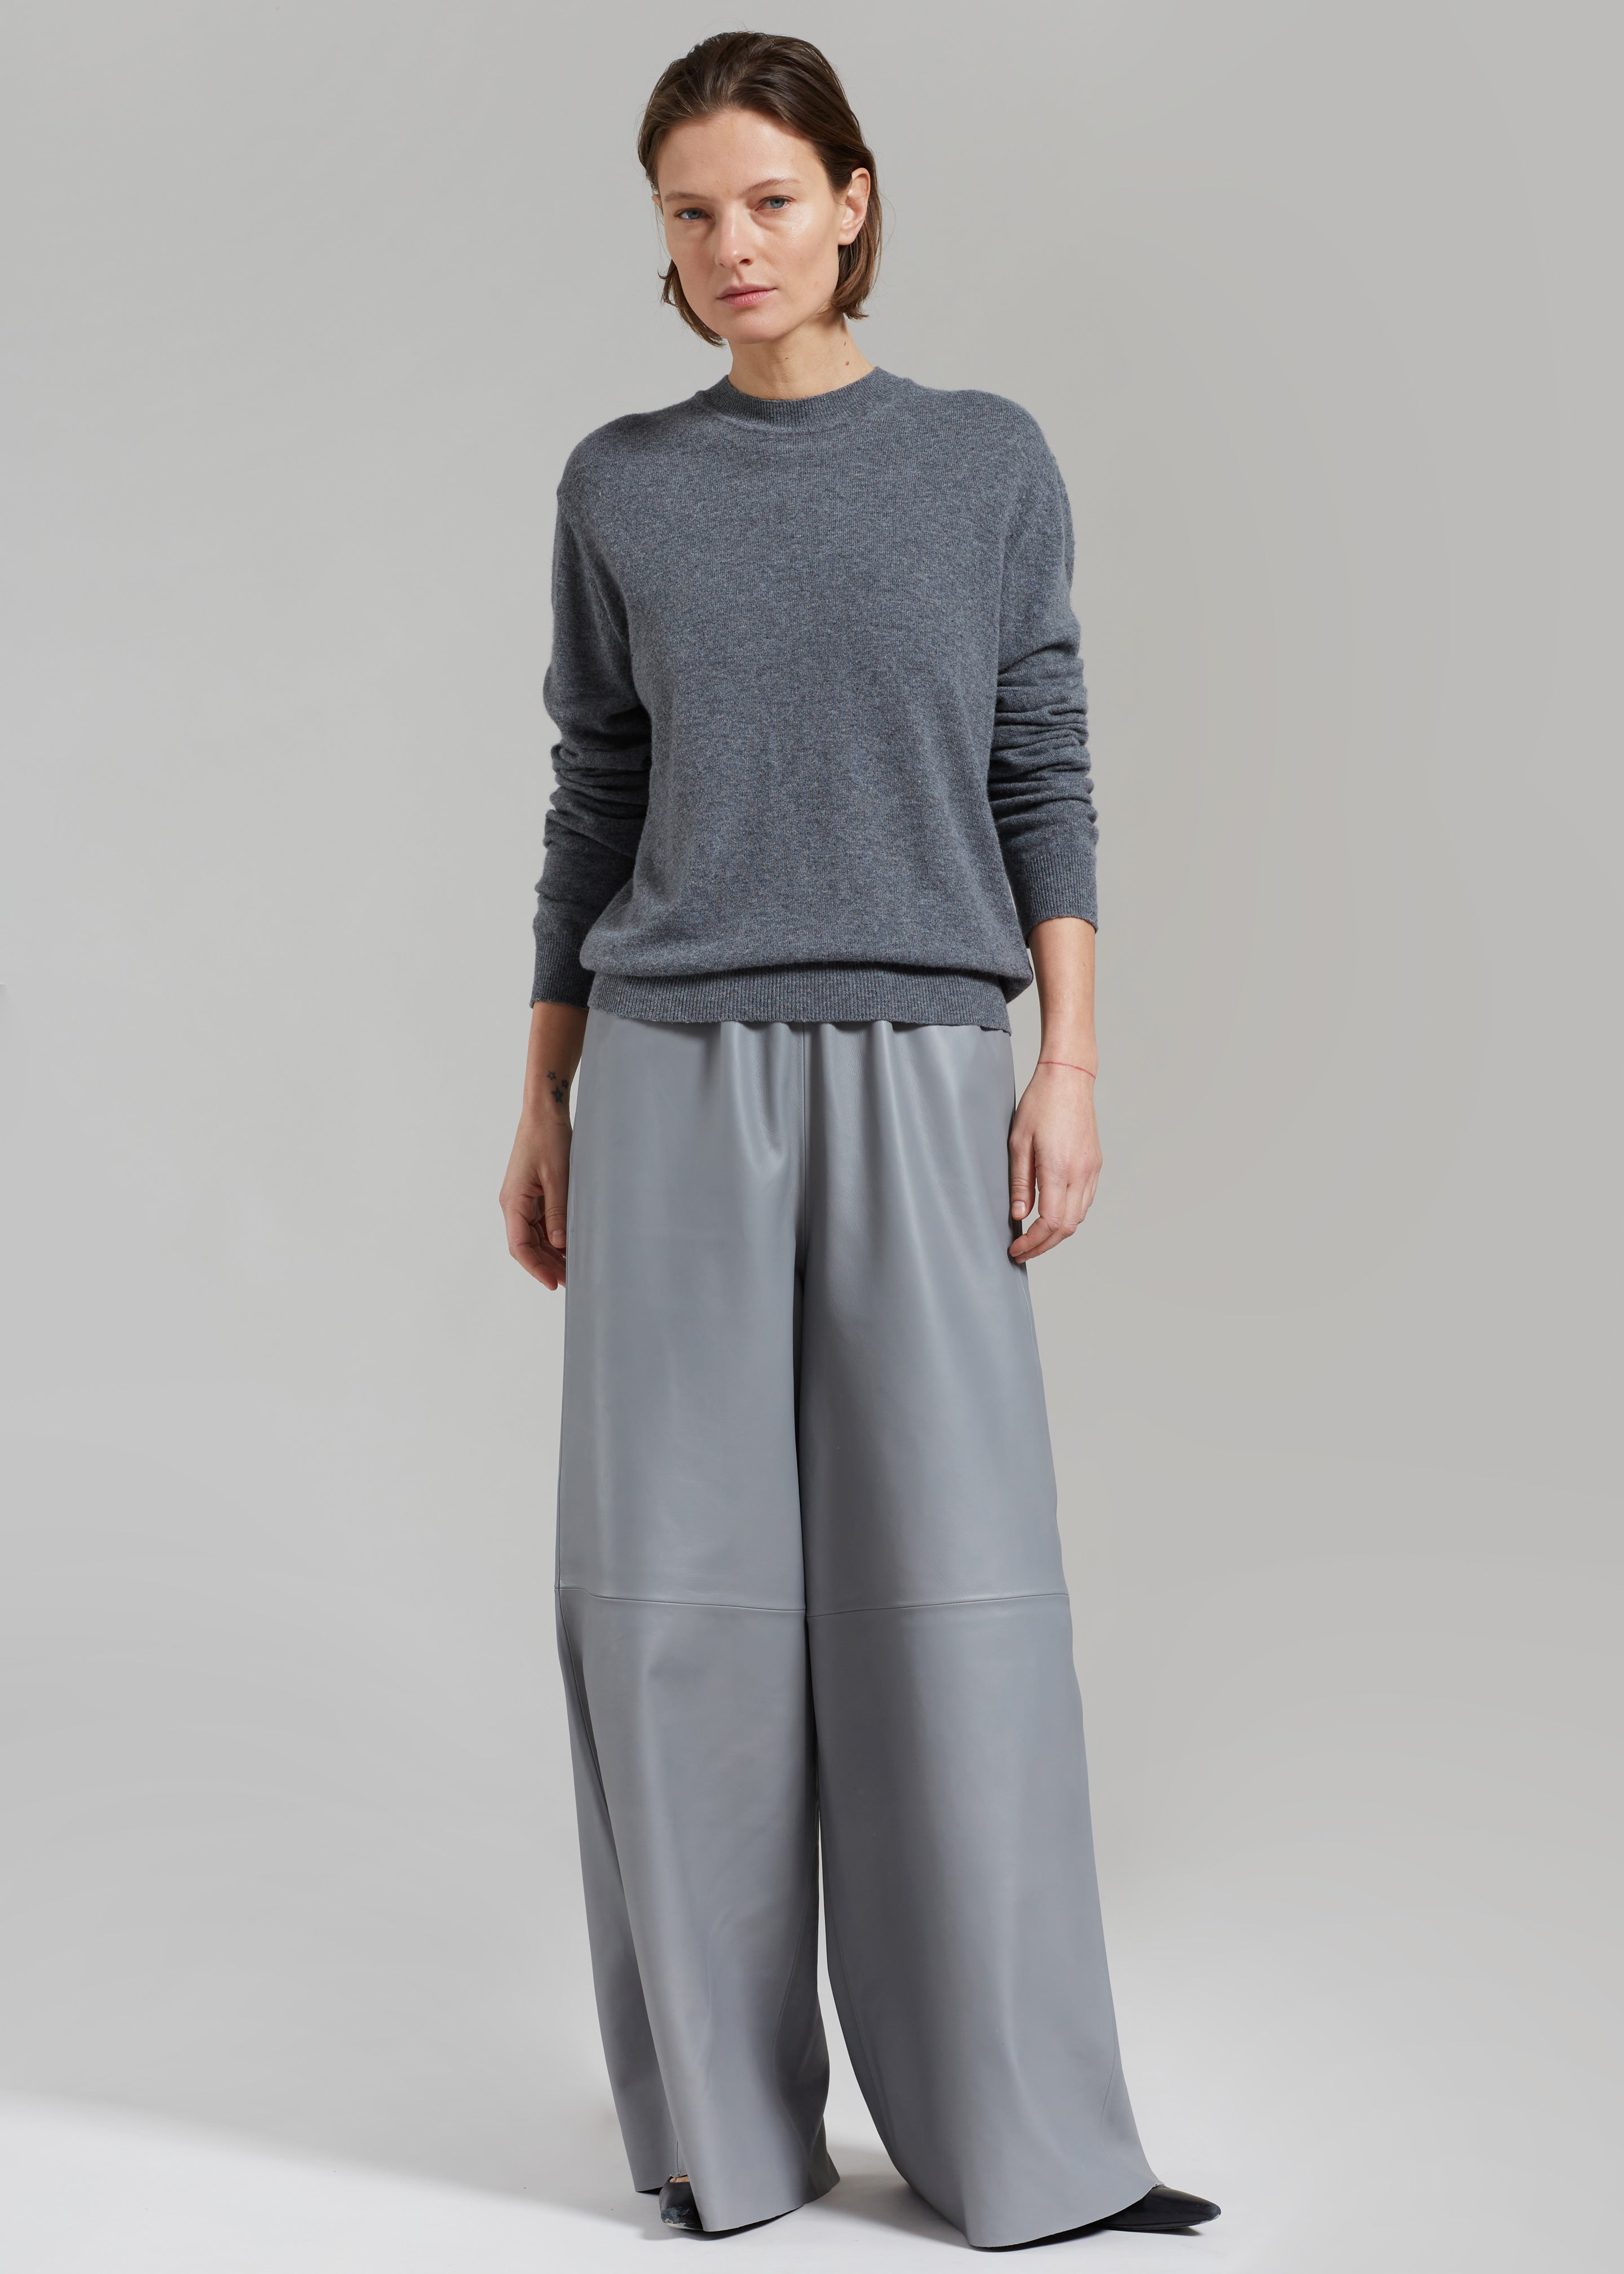 Aurora Wool Blend Knit Sweater - Grey - 2